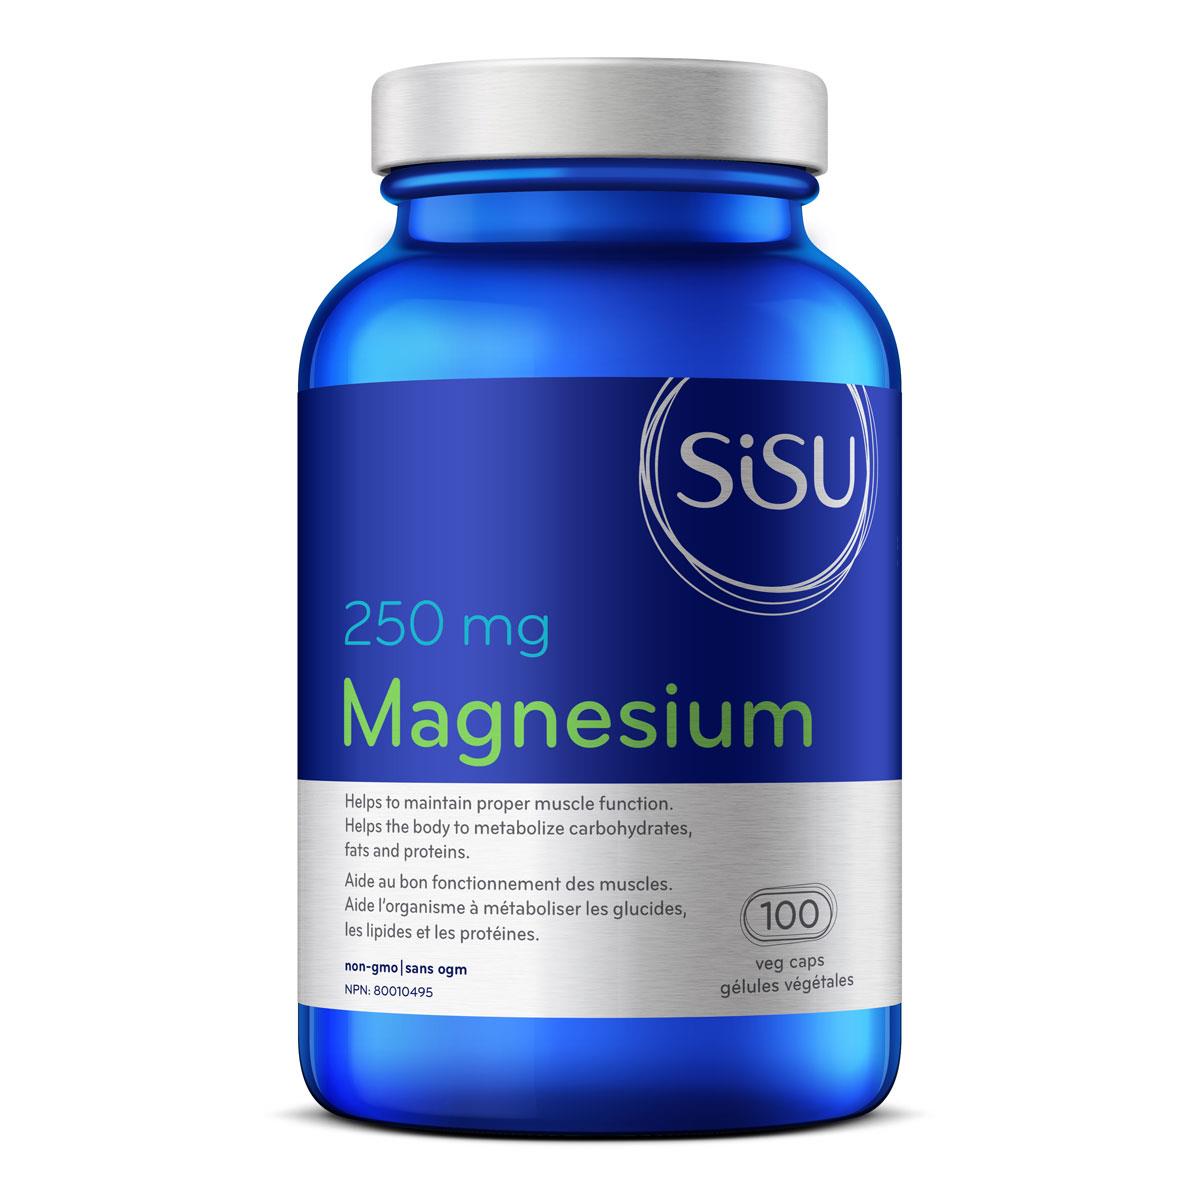 Homegrown Foods - Buy Online - Sisu Magnesium